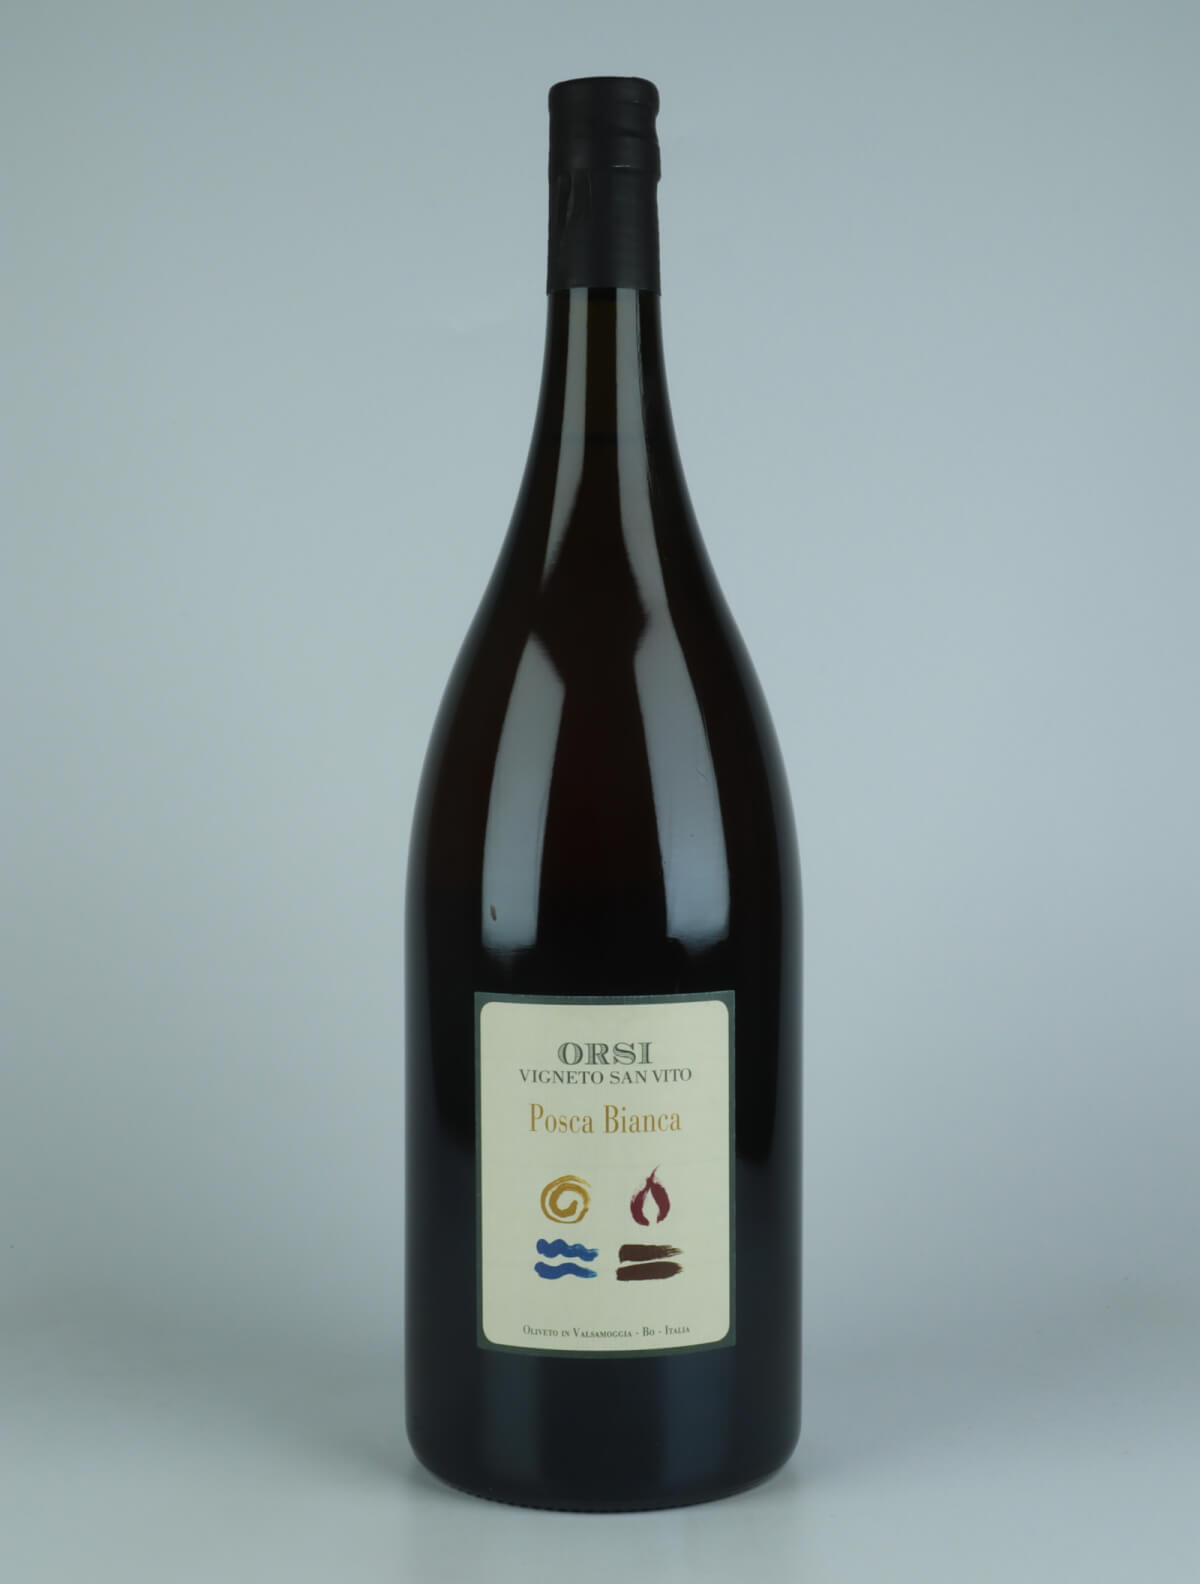 A bottle N.V. Posca Bianca - Magnum White wine from Orsi - San Vito, Emilia-Romagna in Italy